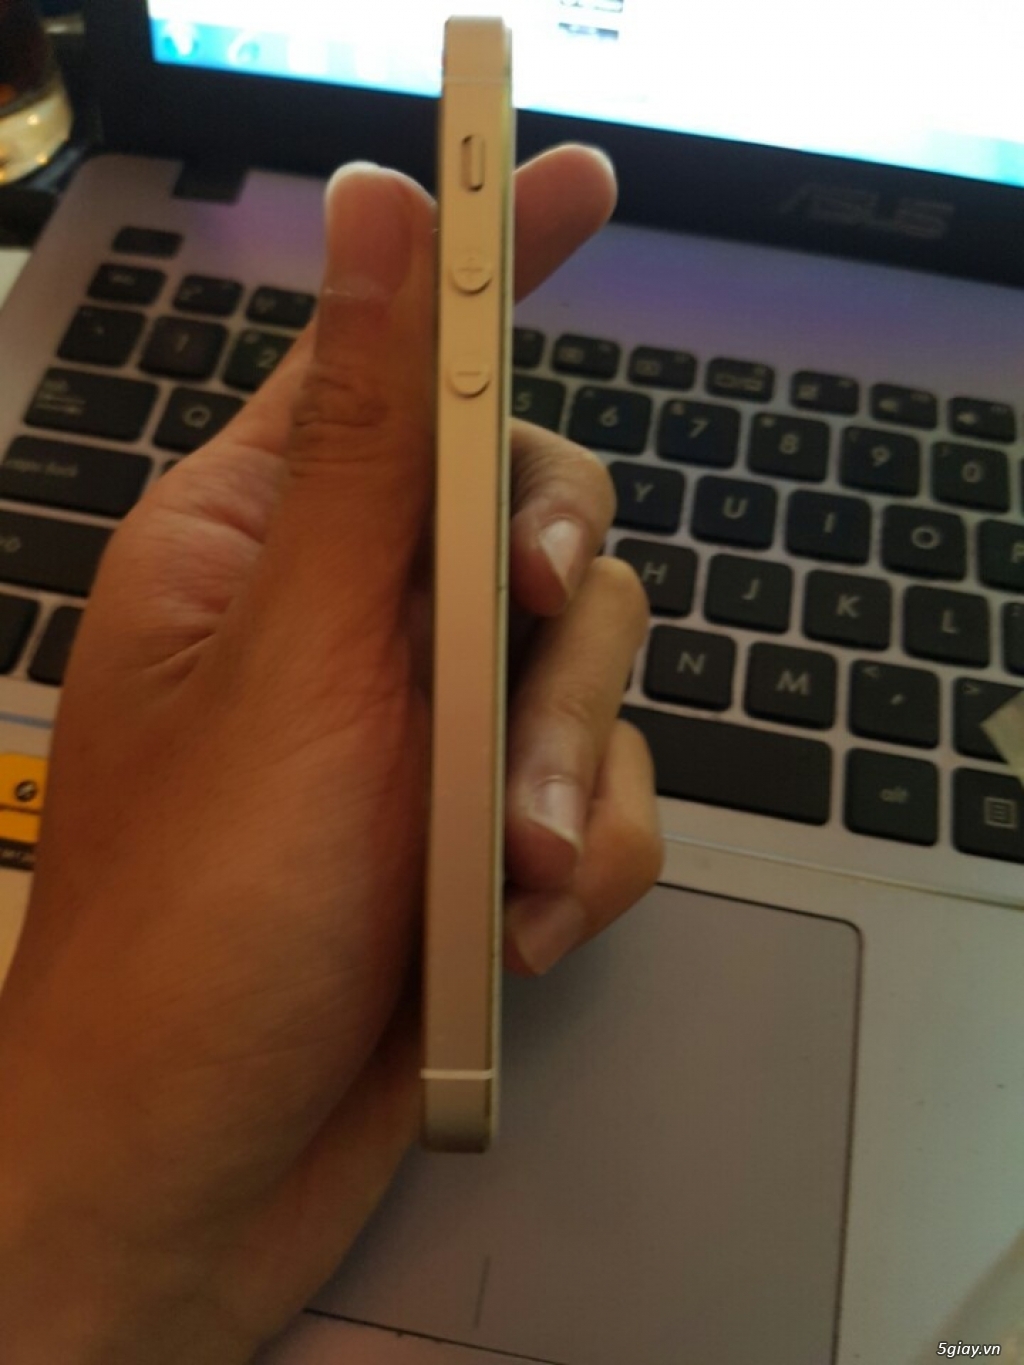 iphone 5s gold 16gb